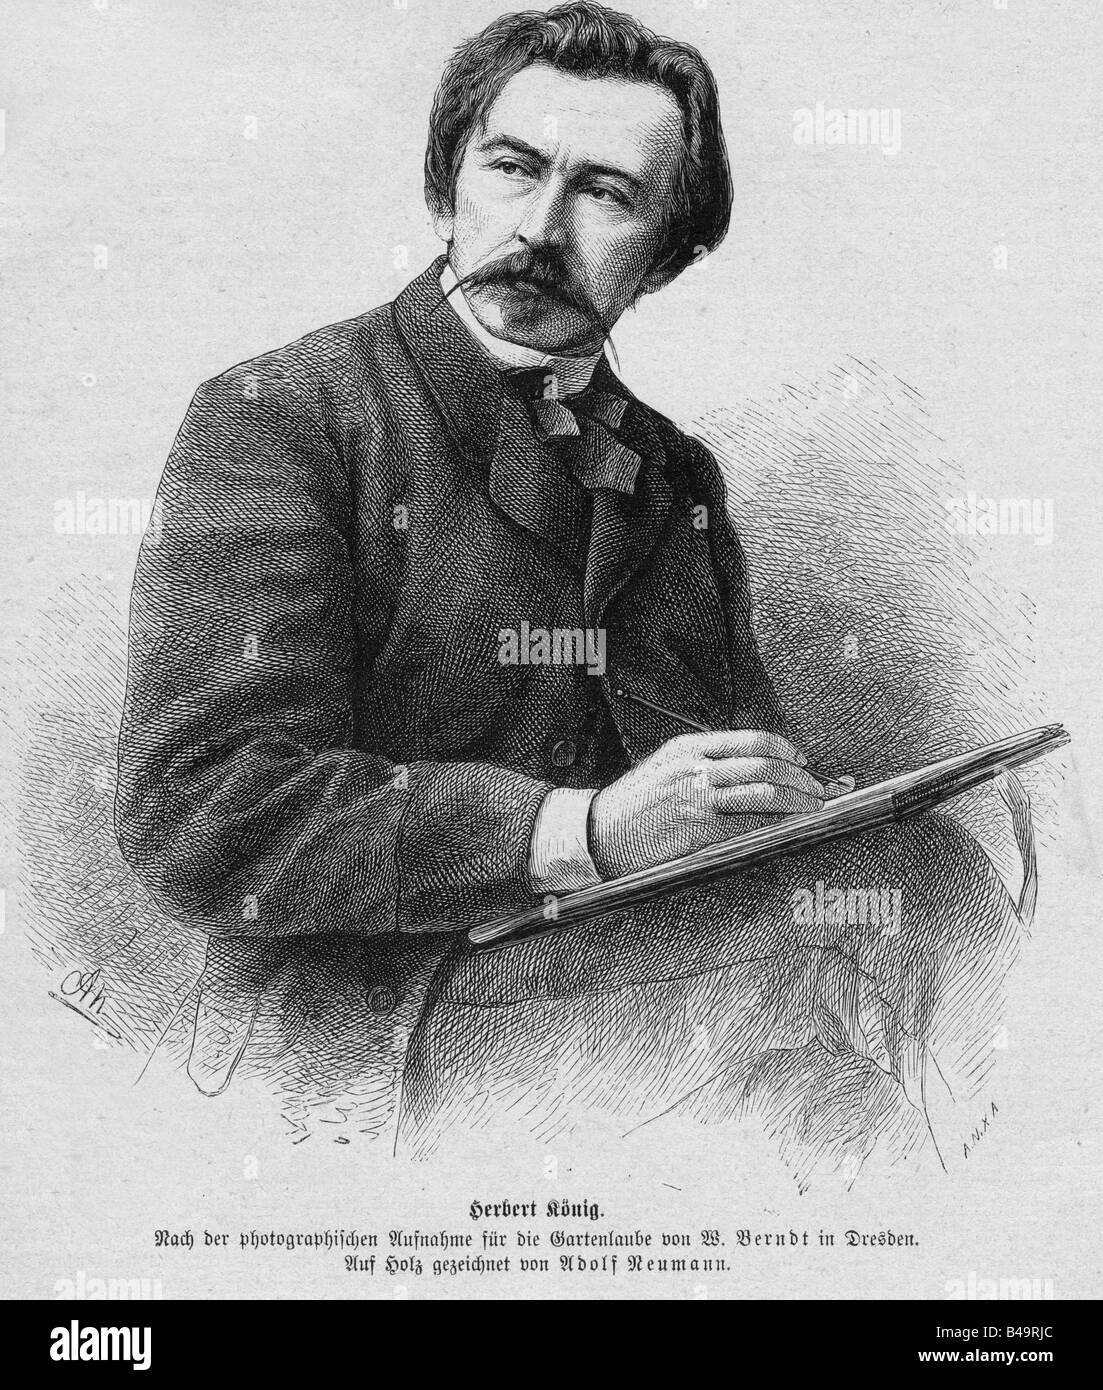 Koenig, Herbert, 1820 - 13.6.1876, German painter and actor, half length, engraving by Adolf Neumann, 19th century, Stock Photo